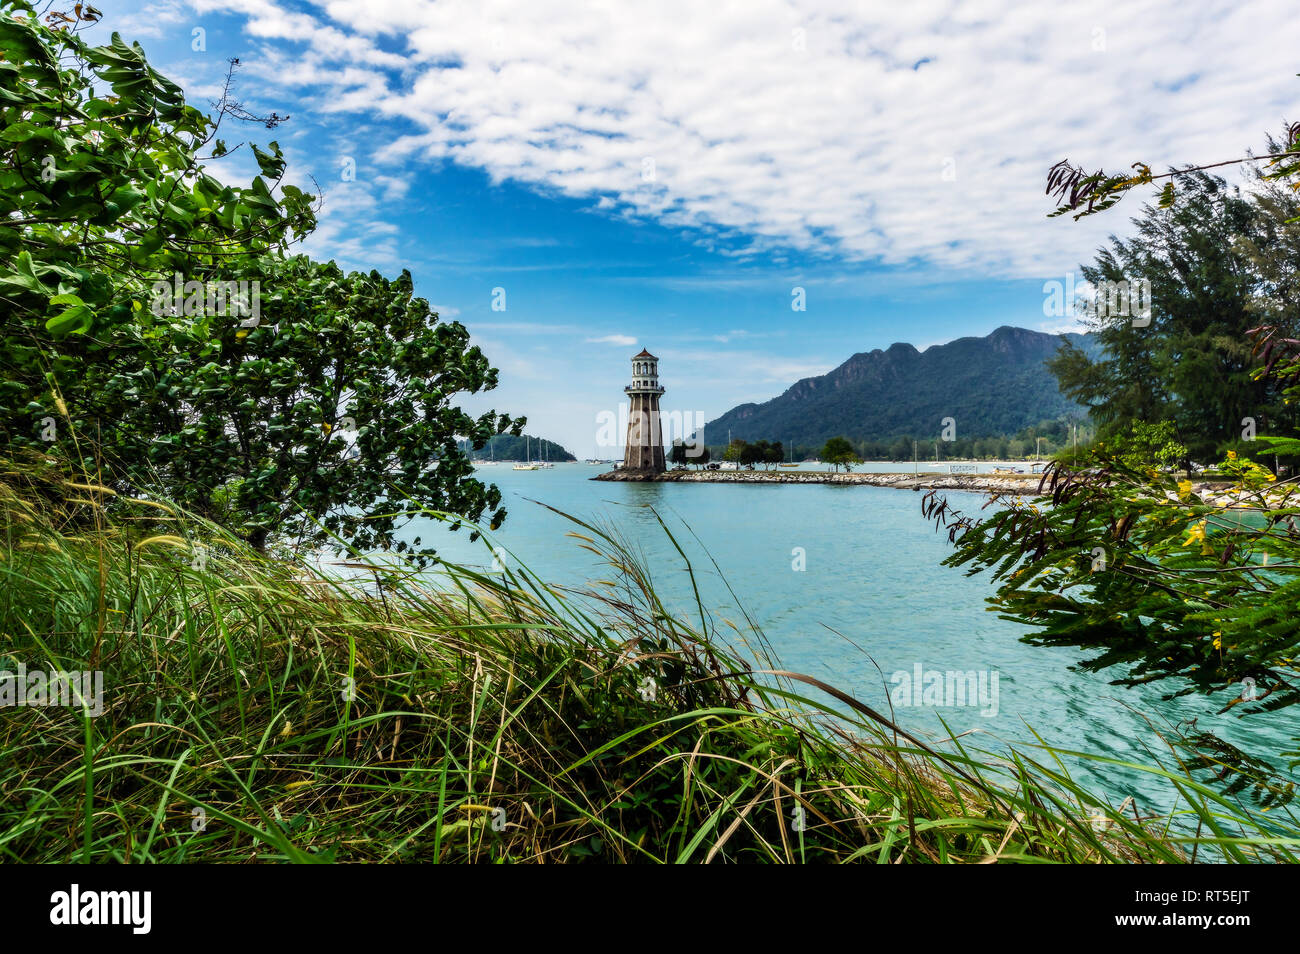 Malaysia, Pulau Langkawi, Light house Foto Stock